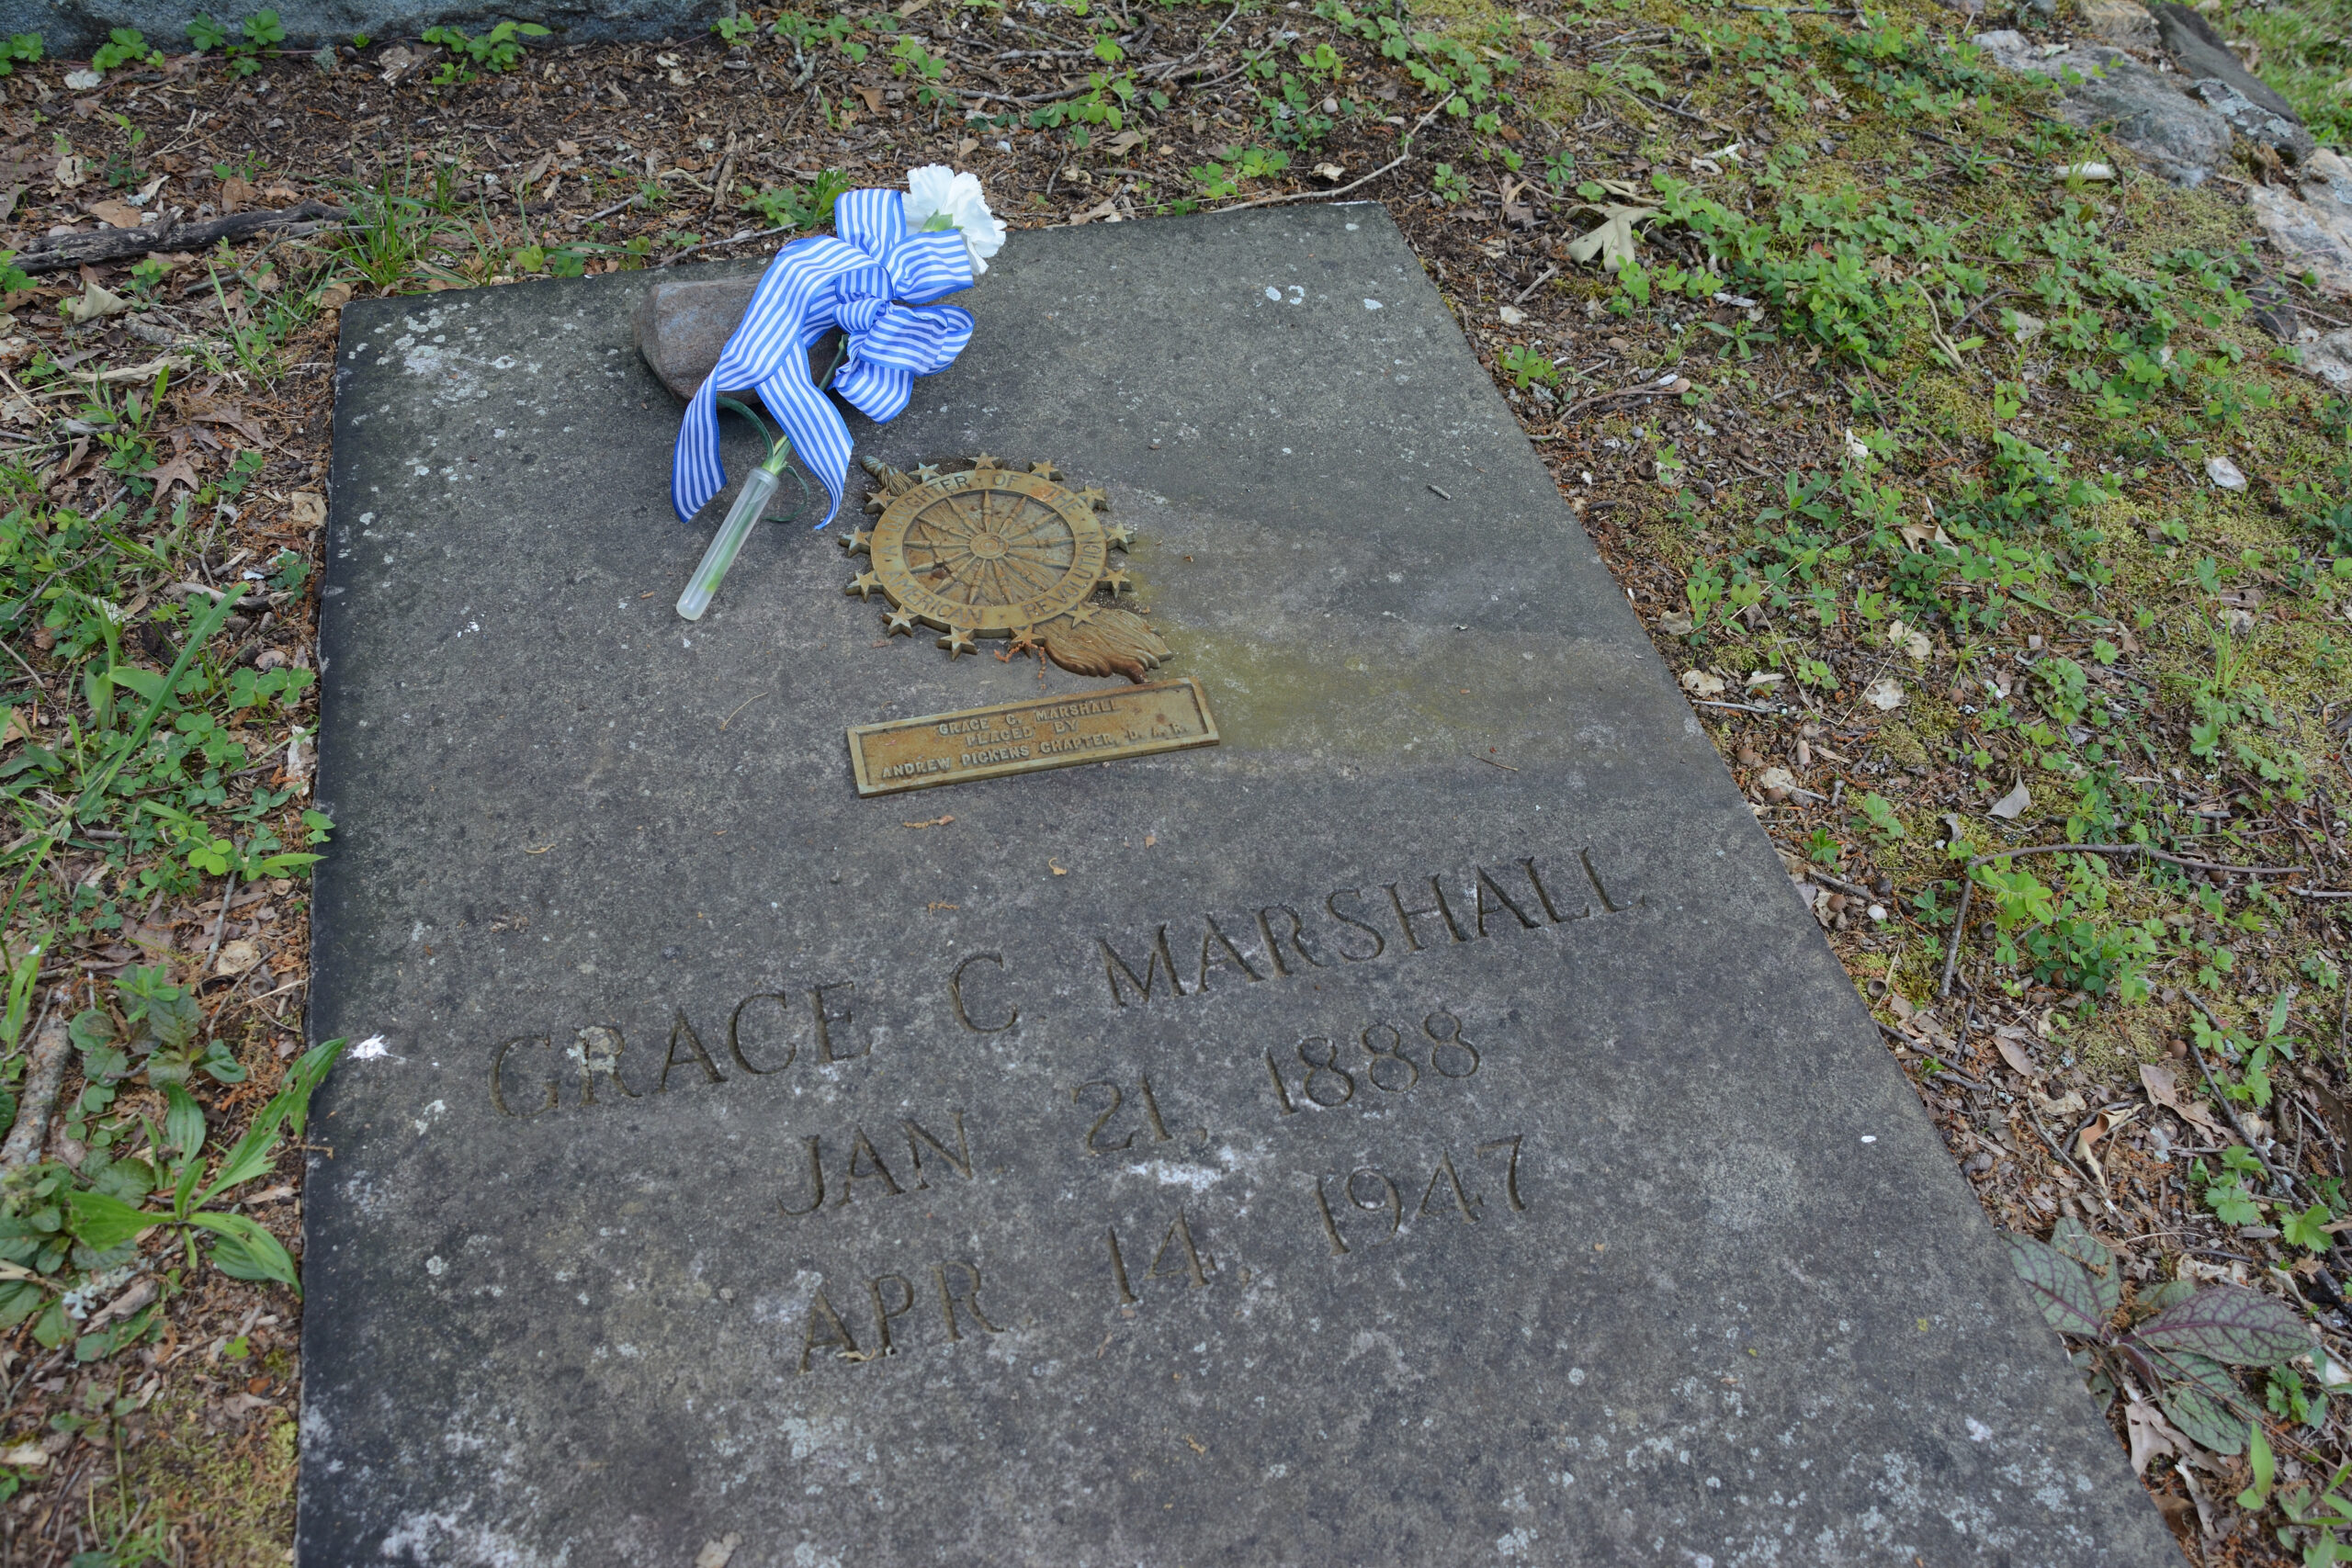 Mrs. Grace C. Marshall's grave